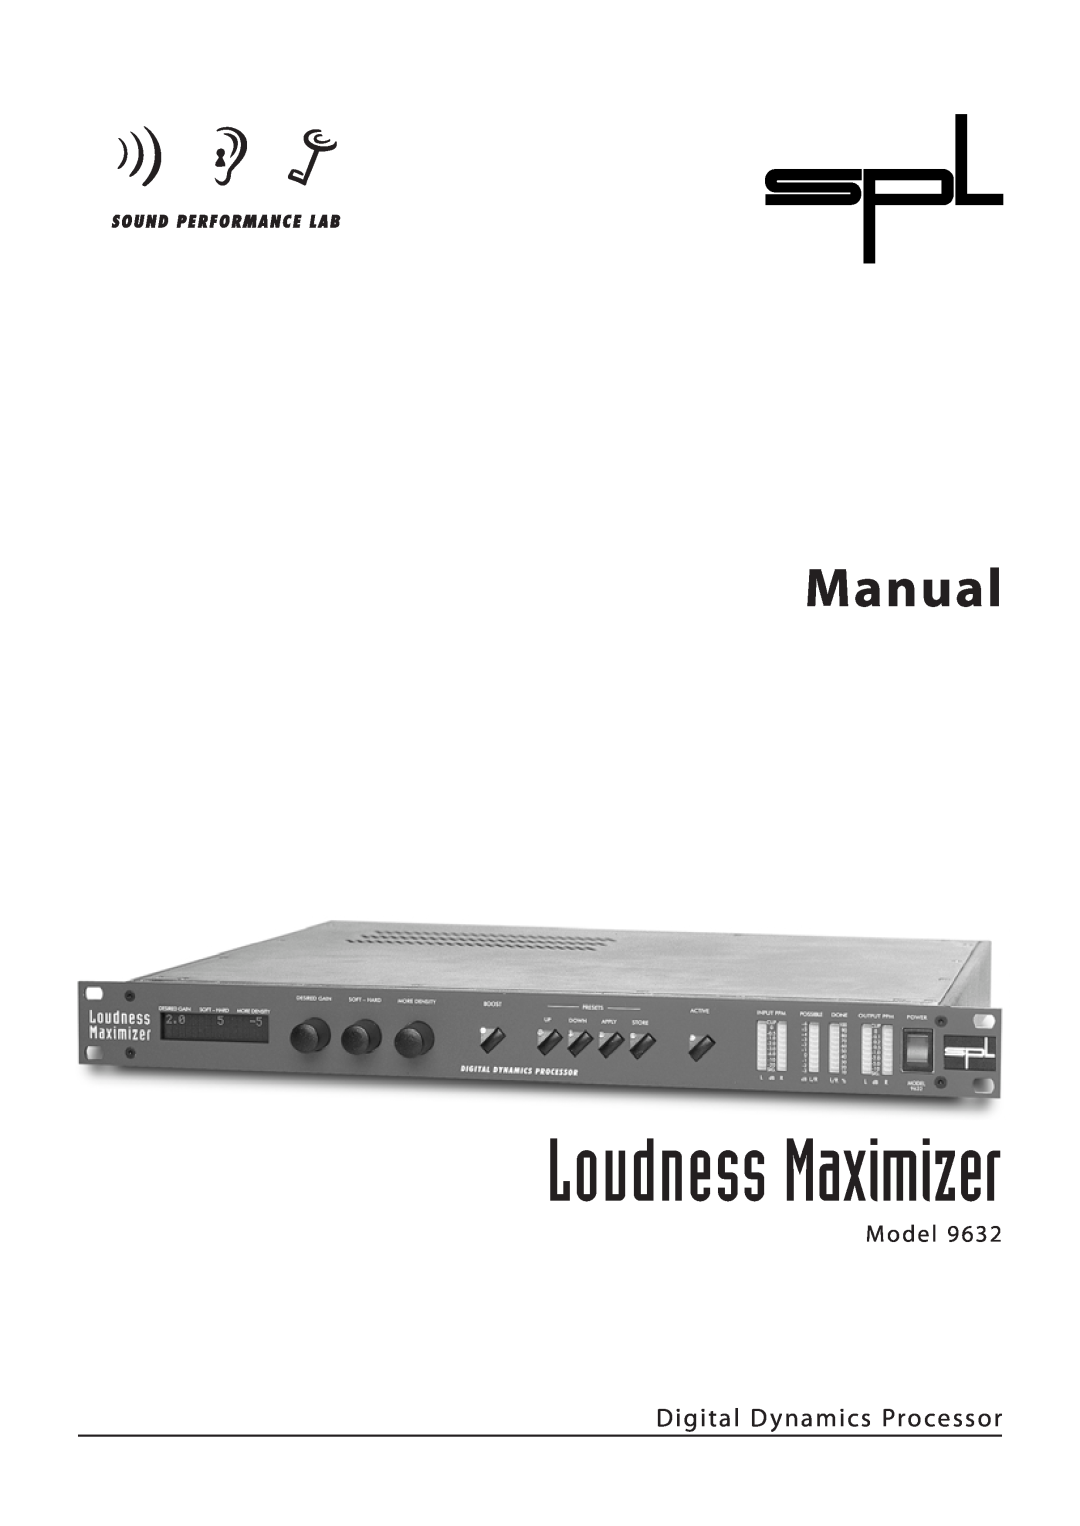 Sound Performance Lab 9632 manual Loudness Maximizer, Manual, Digital Dynamics Processor, Model 